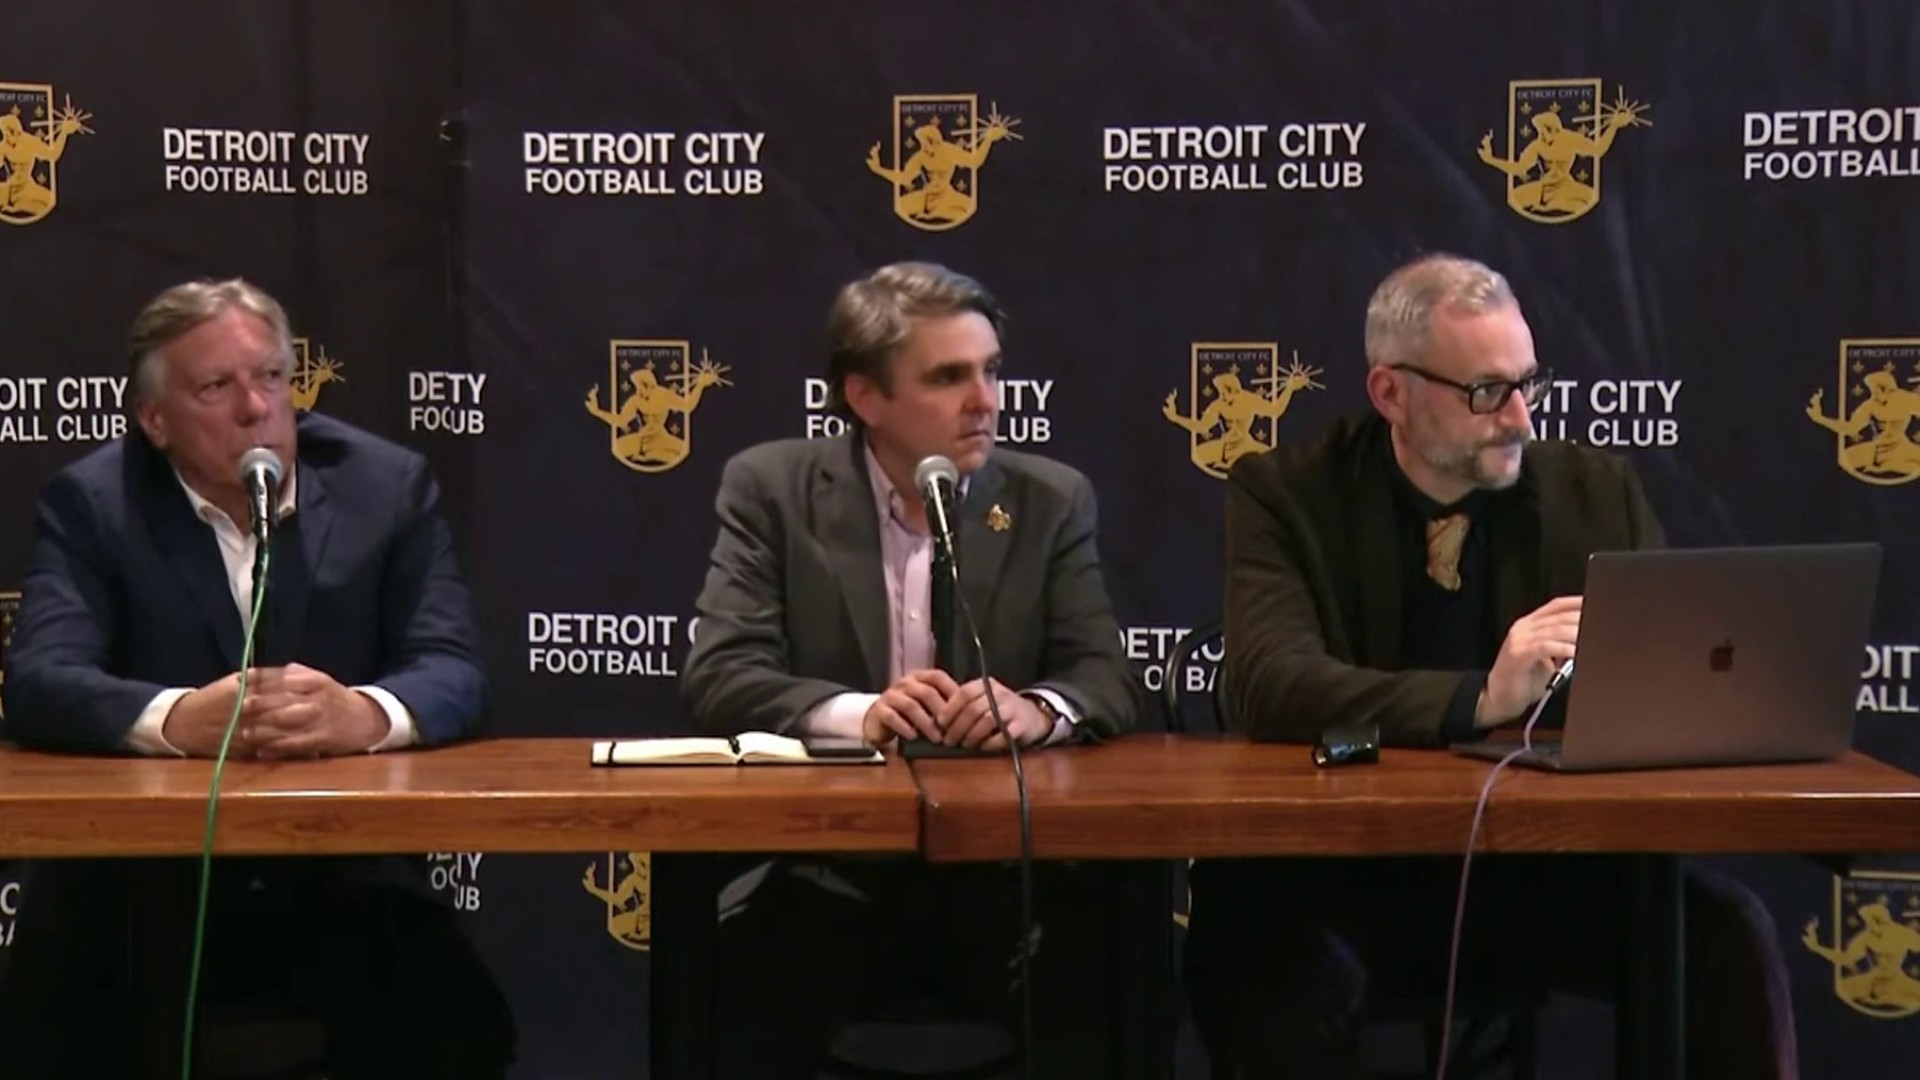 OFICIAL! Detroit City FC vai disputar a USL Championship em 2022